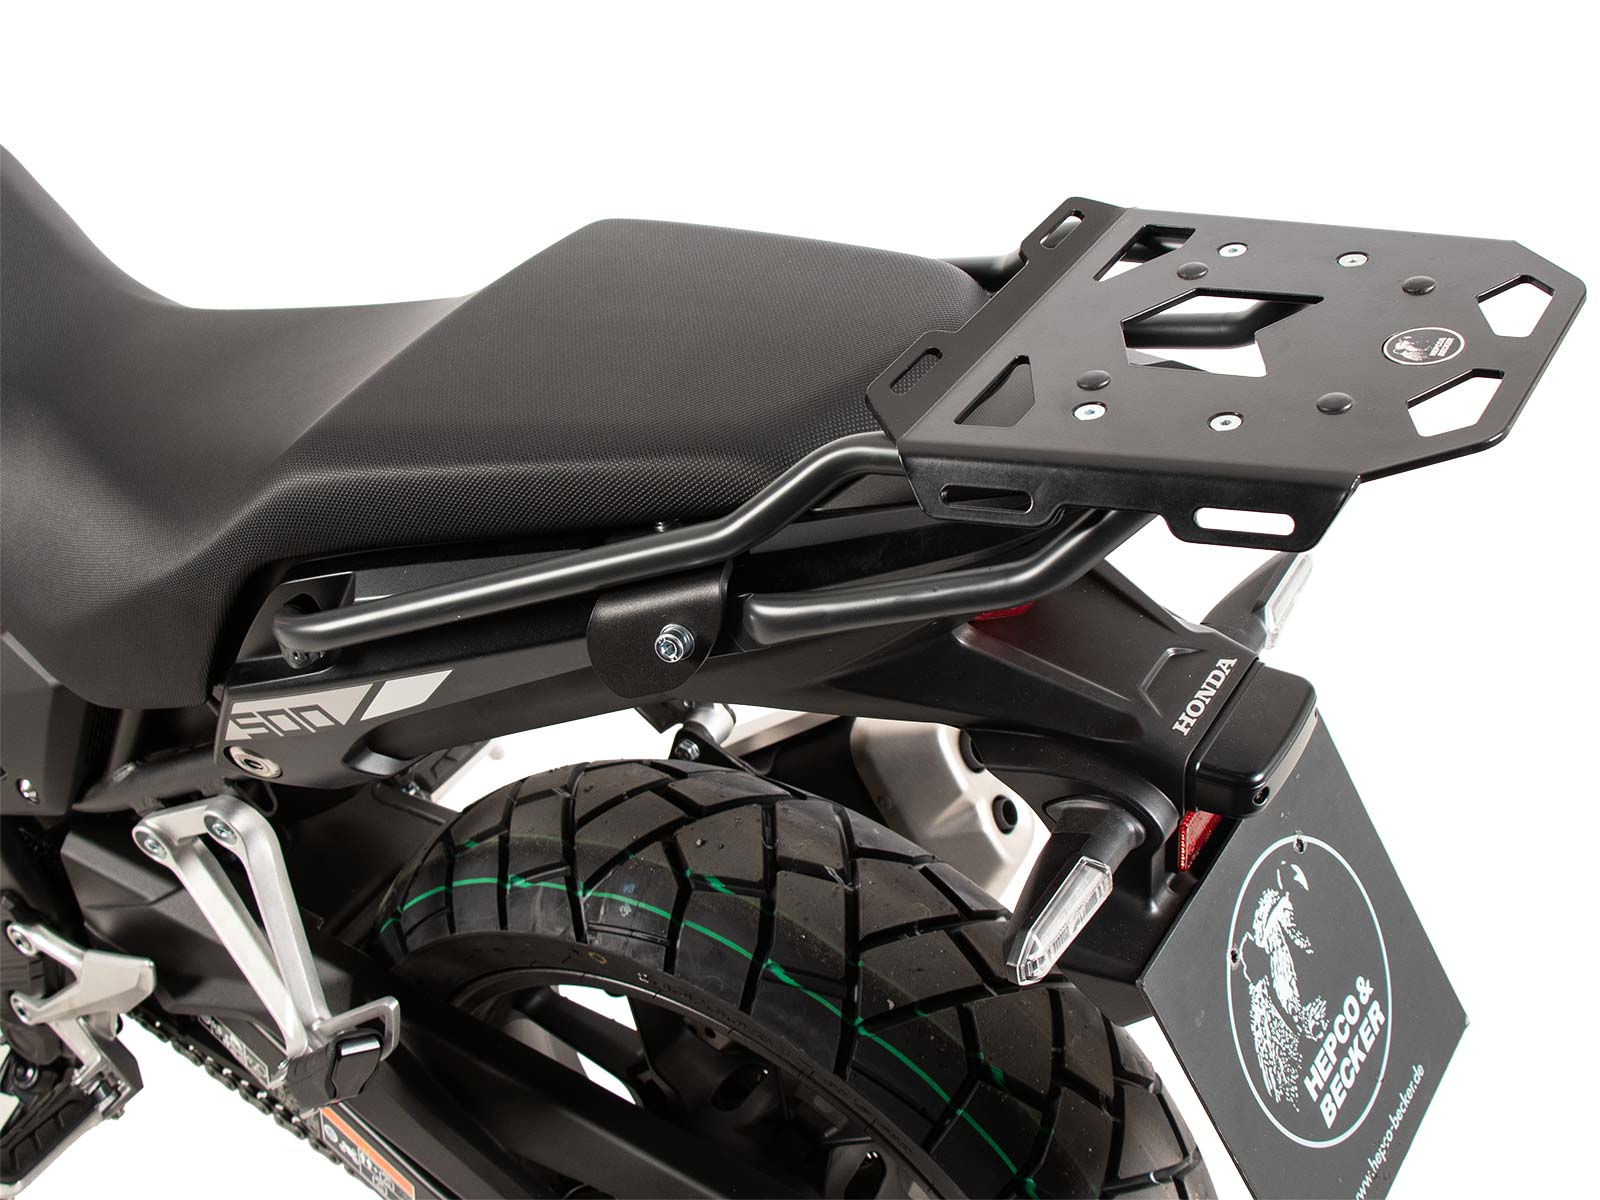 Minirack soft luggage rear rack for Honda CB 500 X (2017-2018)